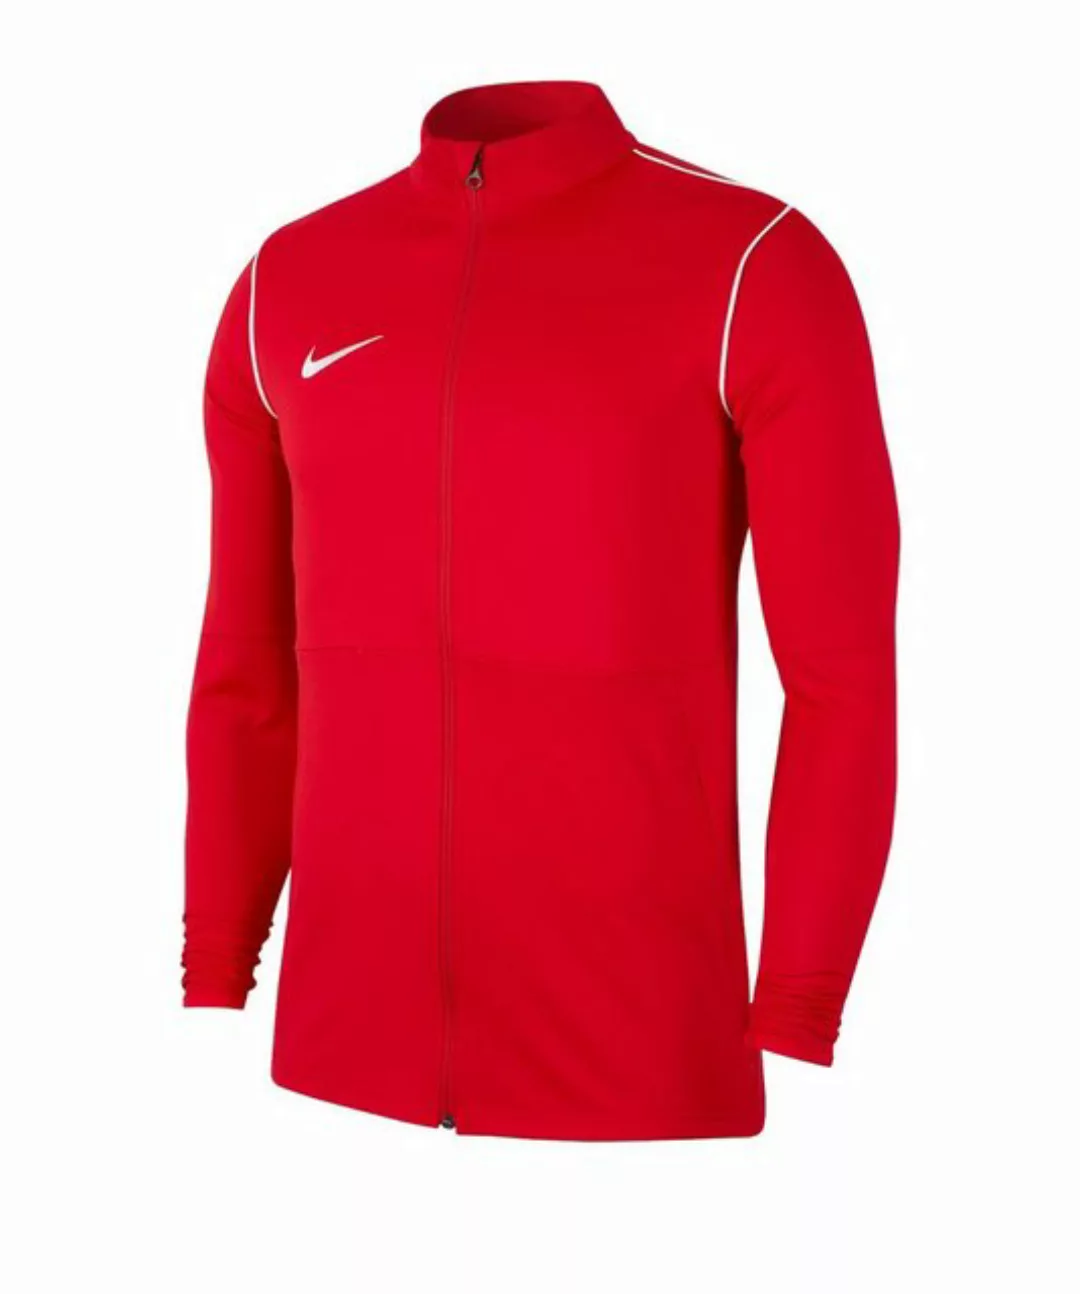 Nike Sweatjacke Park 20 Training Jacke günstig online kaufen